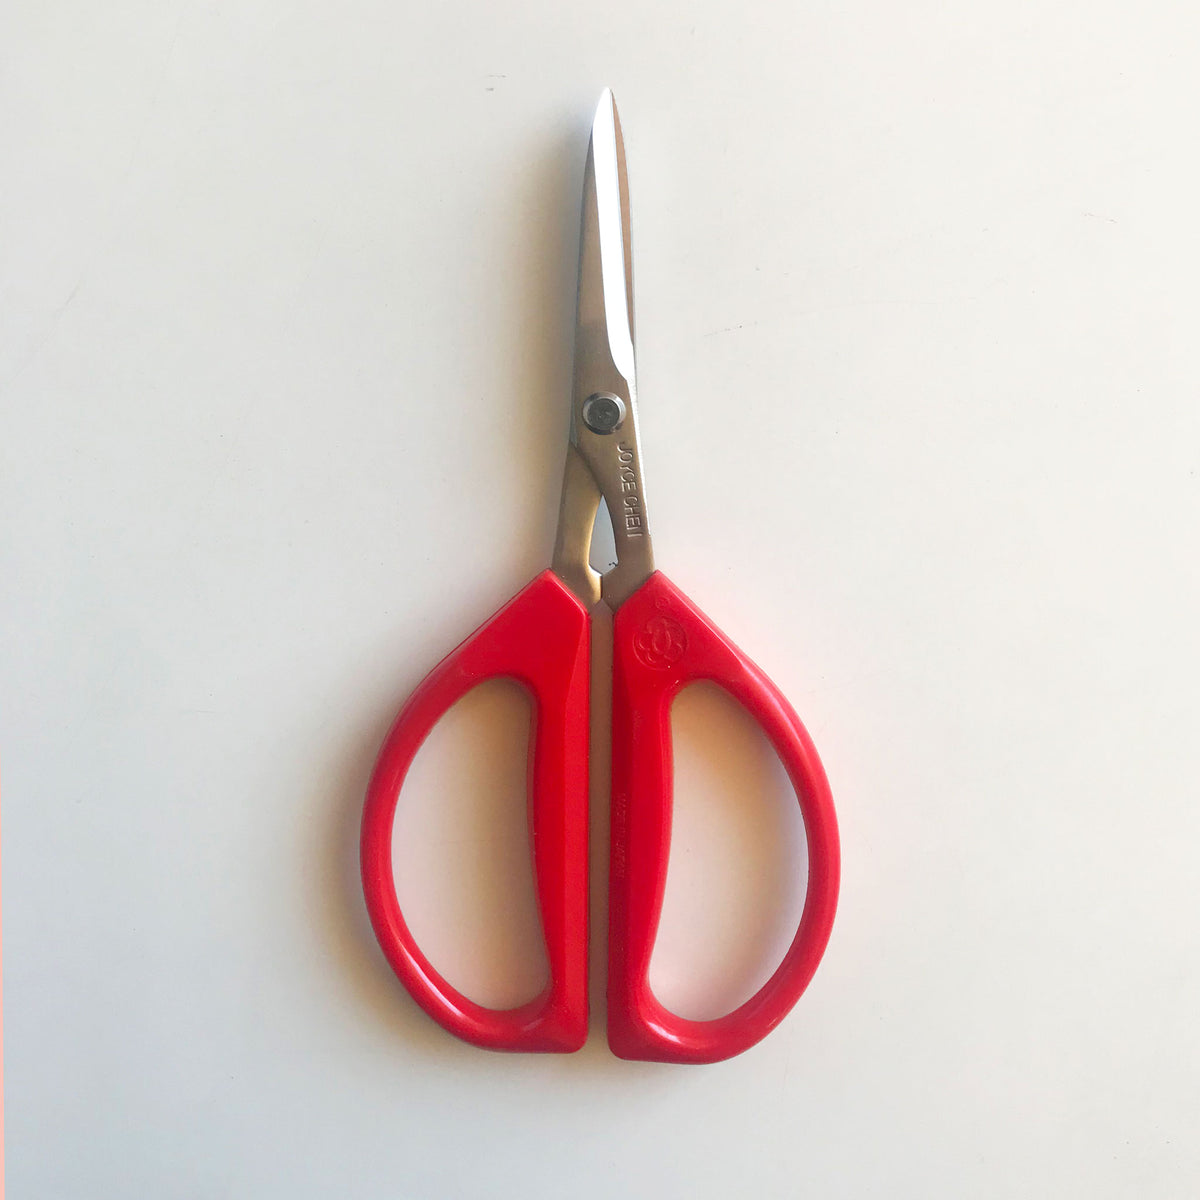 Joyce Chen Unlimited Scissors – Now Serving